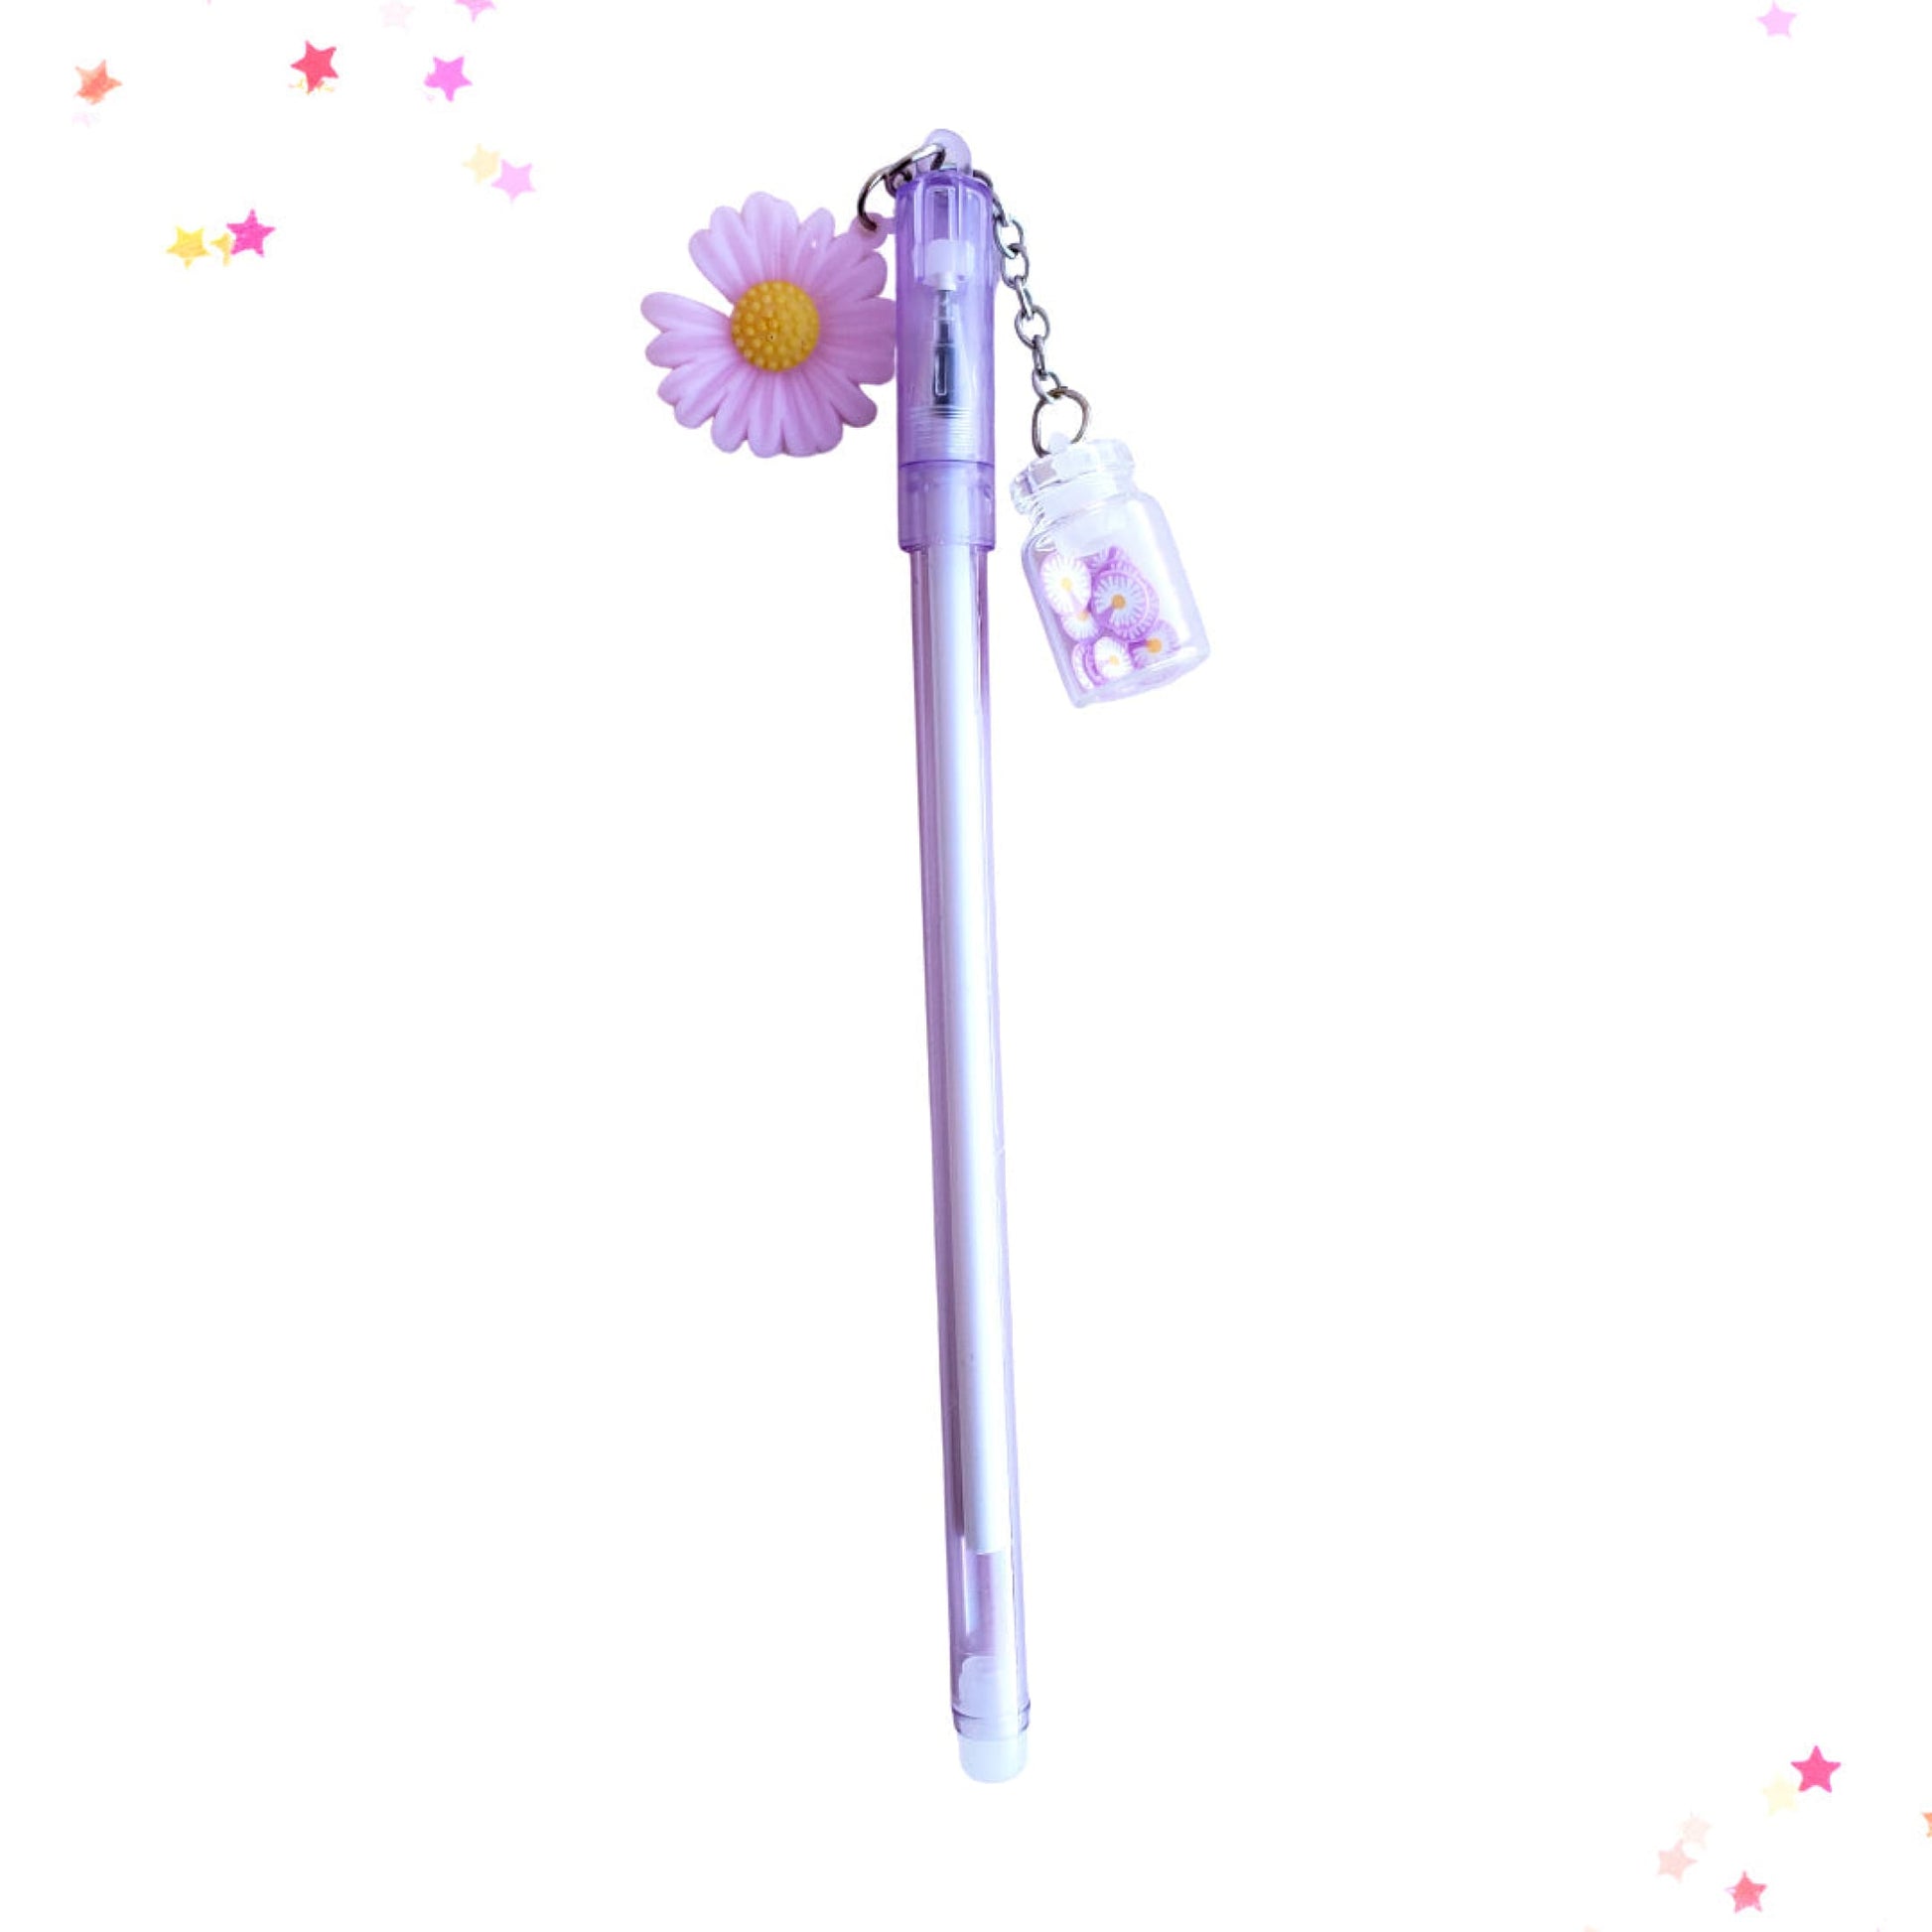 Daisy with Bottle Charm Gel Pen in Purple from Confetti Kitty, Only 2.99